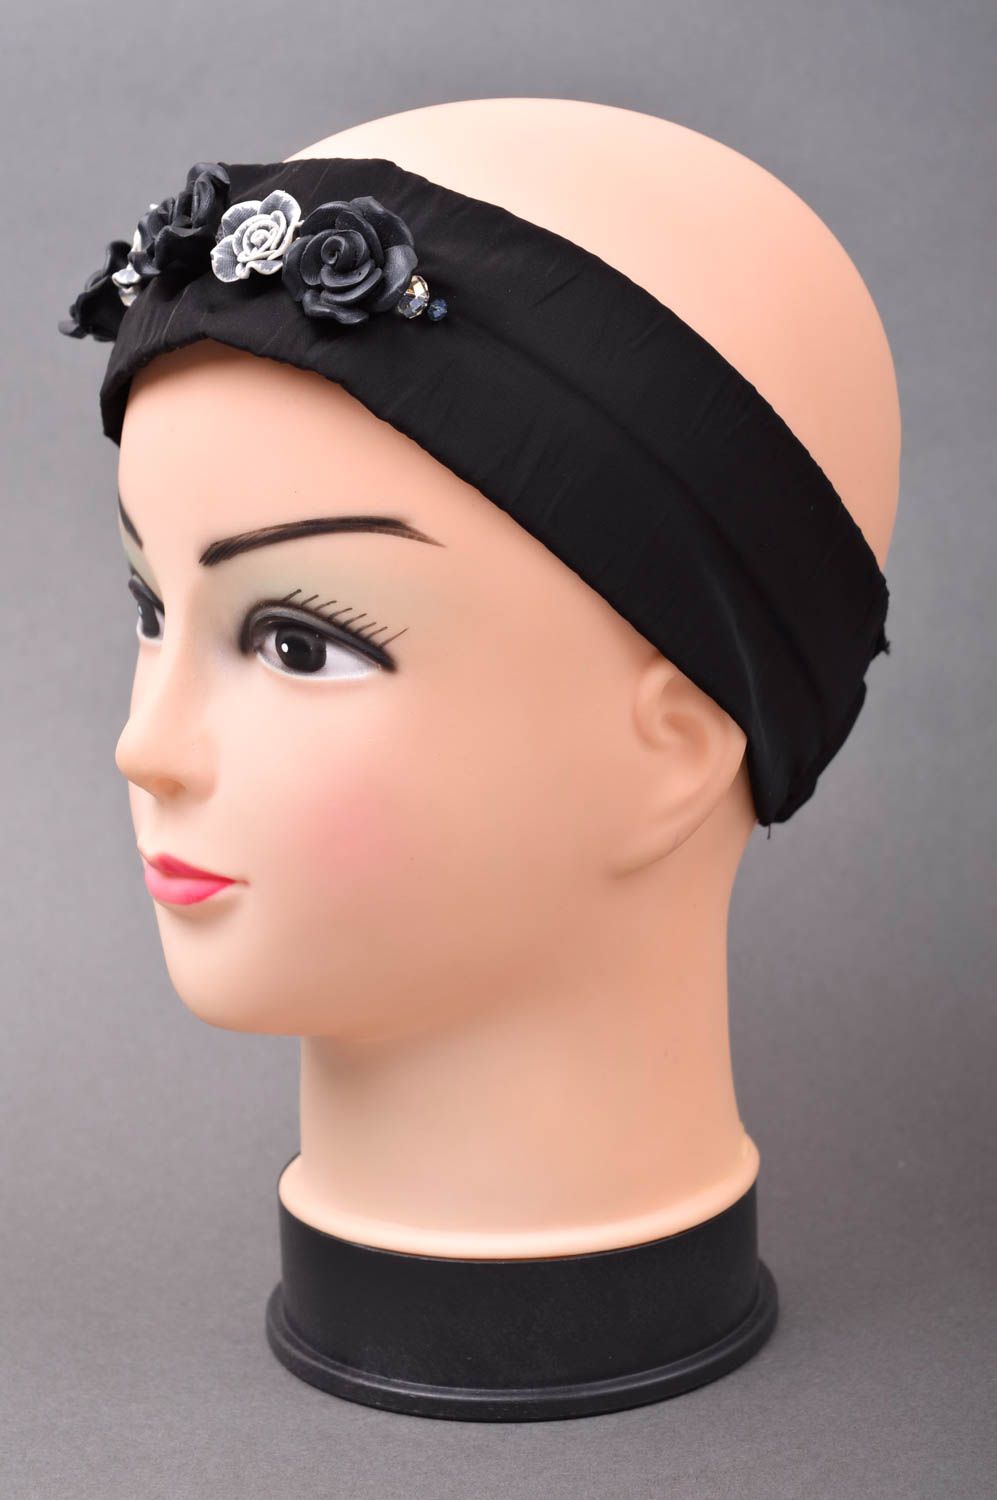 Handmade headband designer head accessory gift ideas headband for girls photo 1